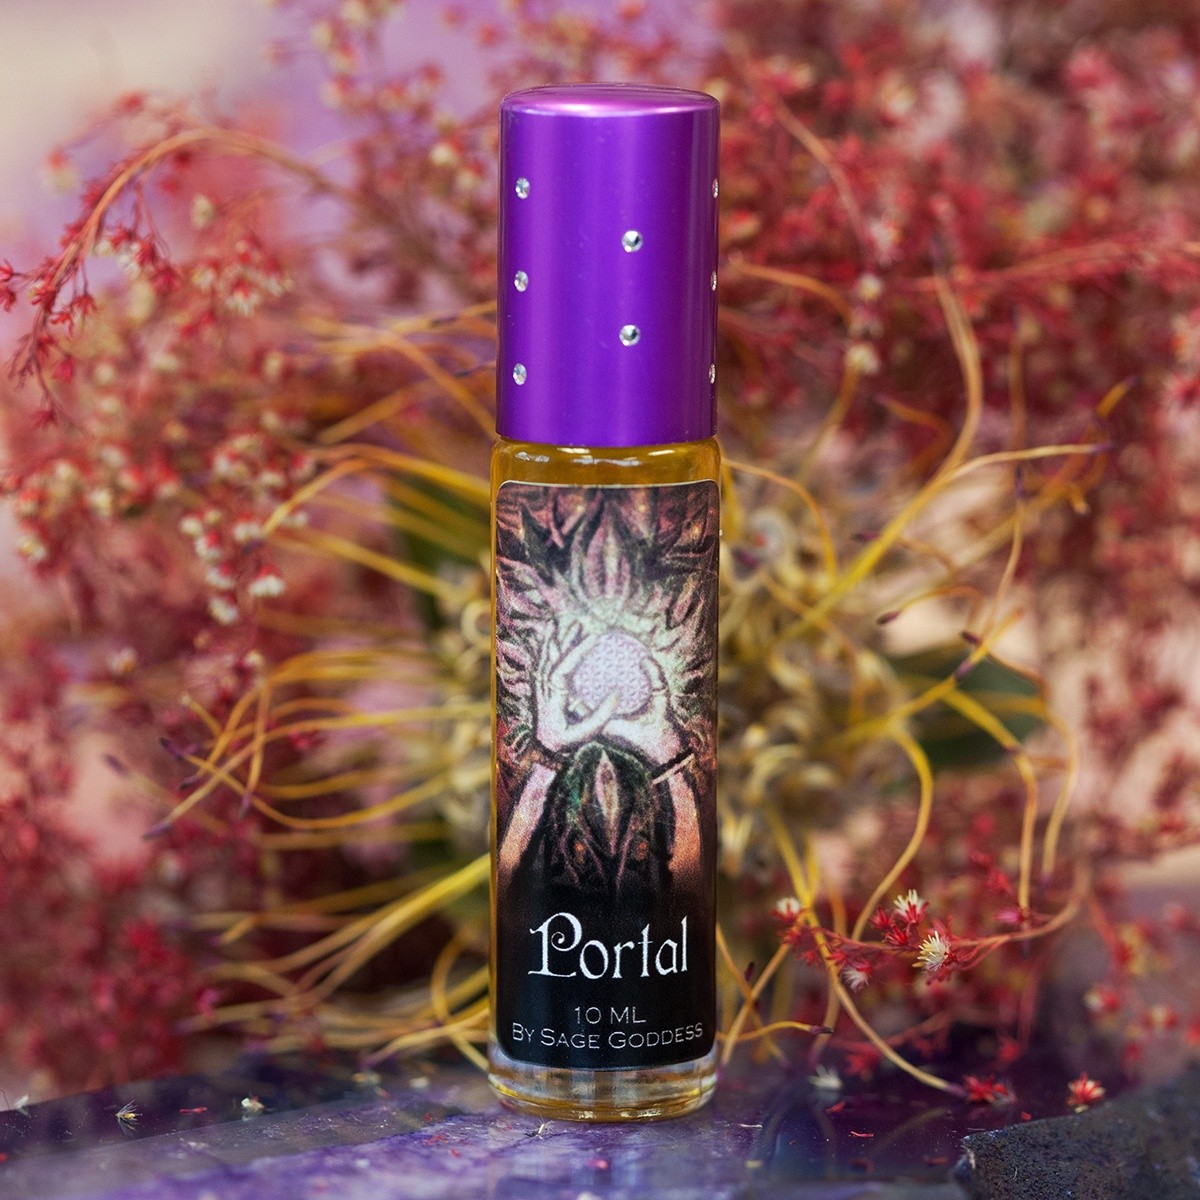 Sage Goddess Portal Perfume with Vetiver & Dark Patchouli